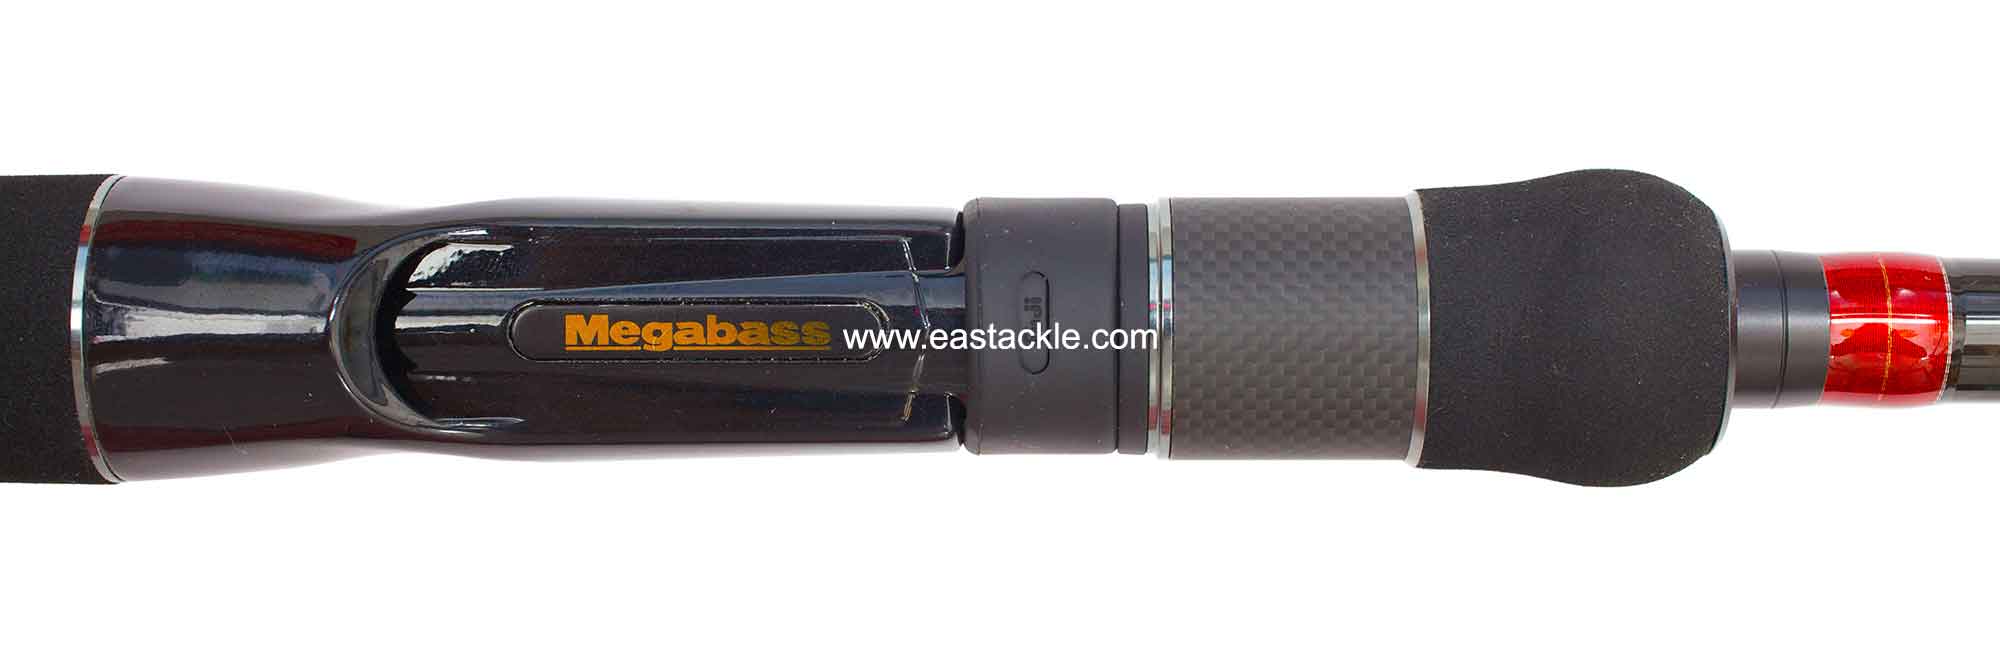 Megabass - Orochi X4 - F6-510X4 - SQUALL - Bait Casting Rod - Reel Seat (Top View)